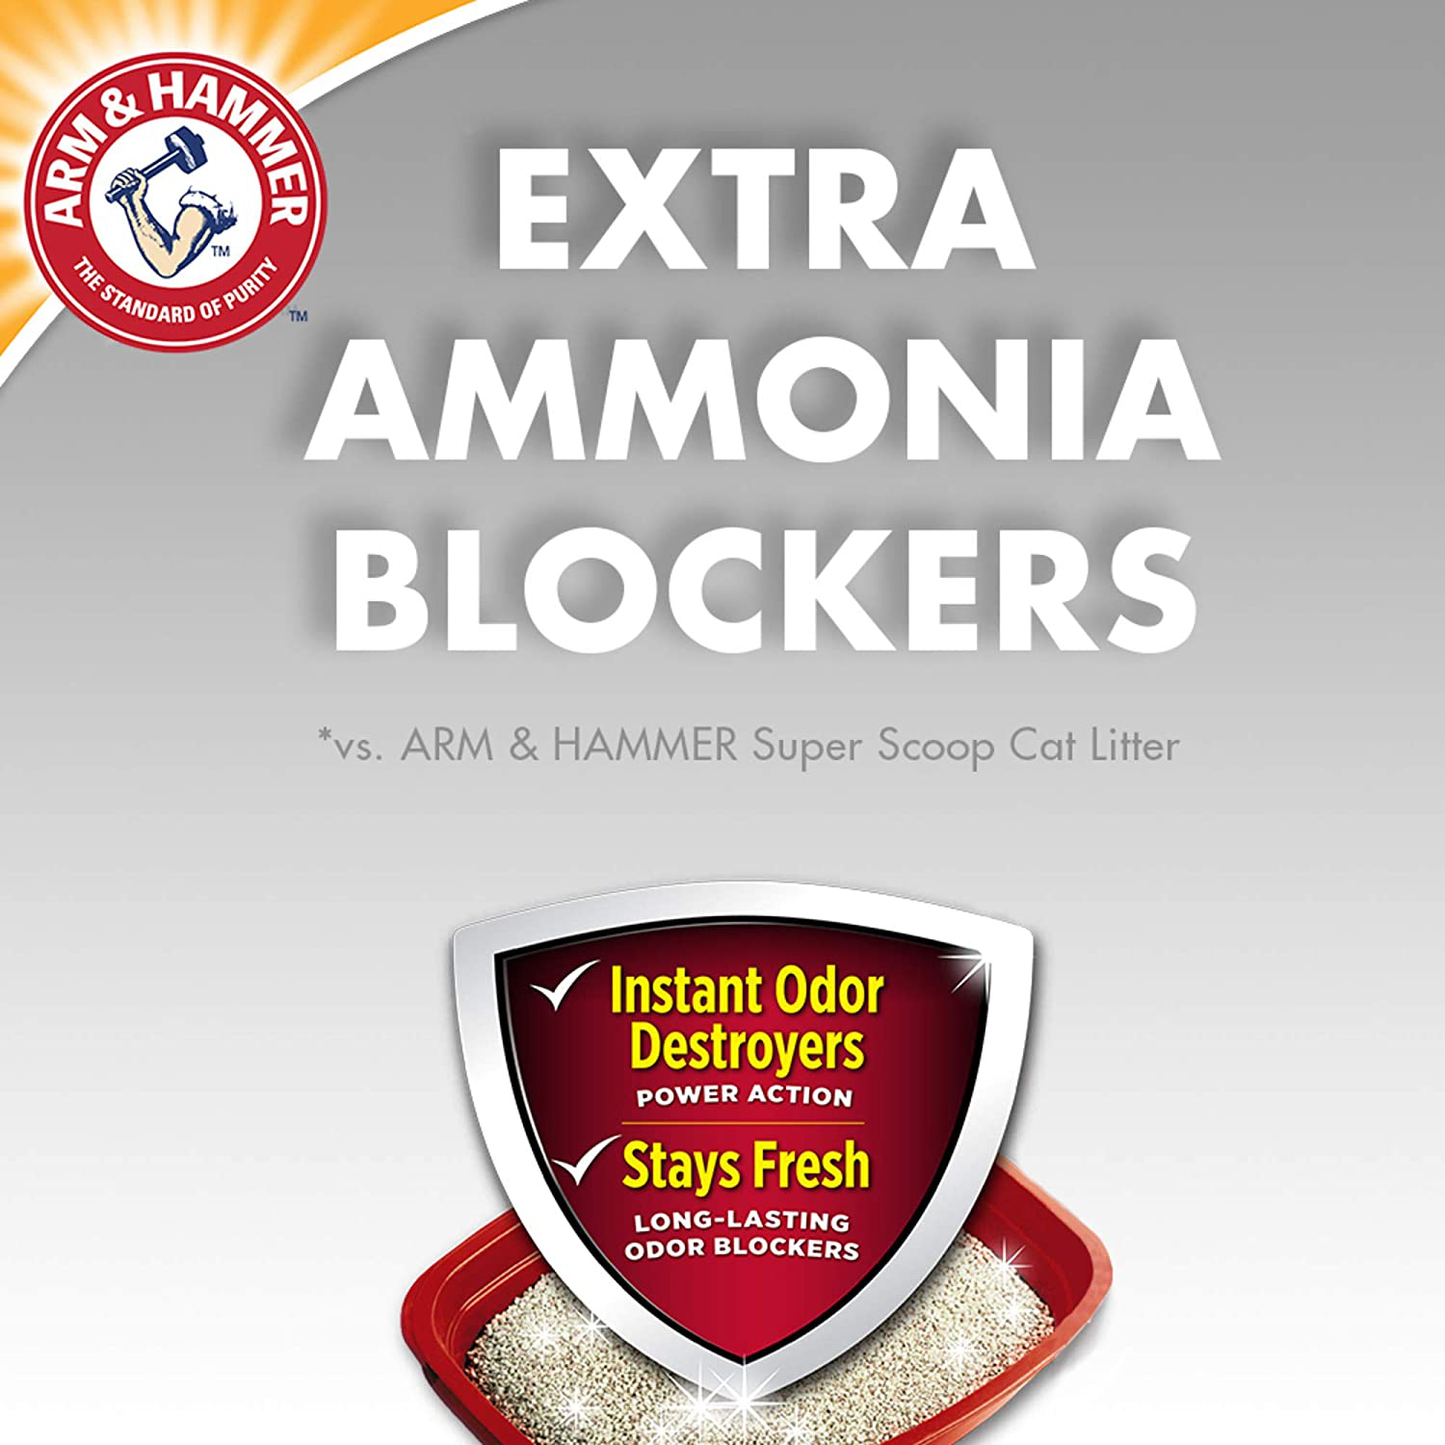 Arm & Hammer Super Scoop Litter, Fragrance Free, 14 Lbs